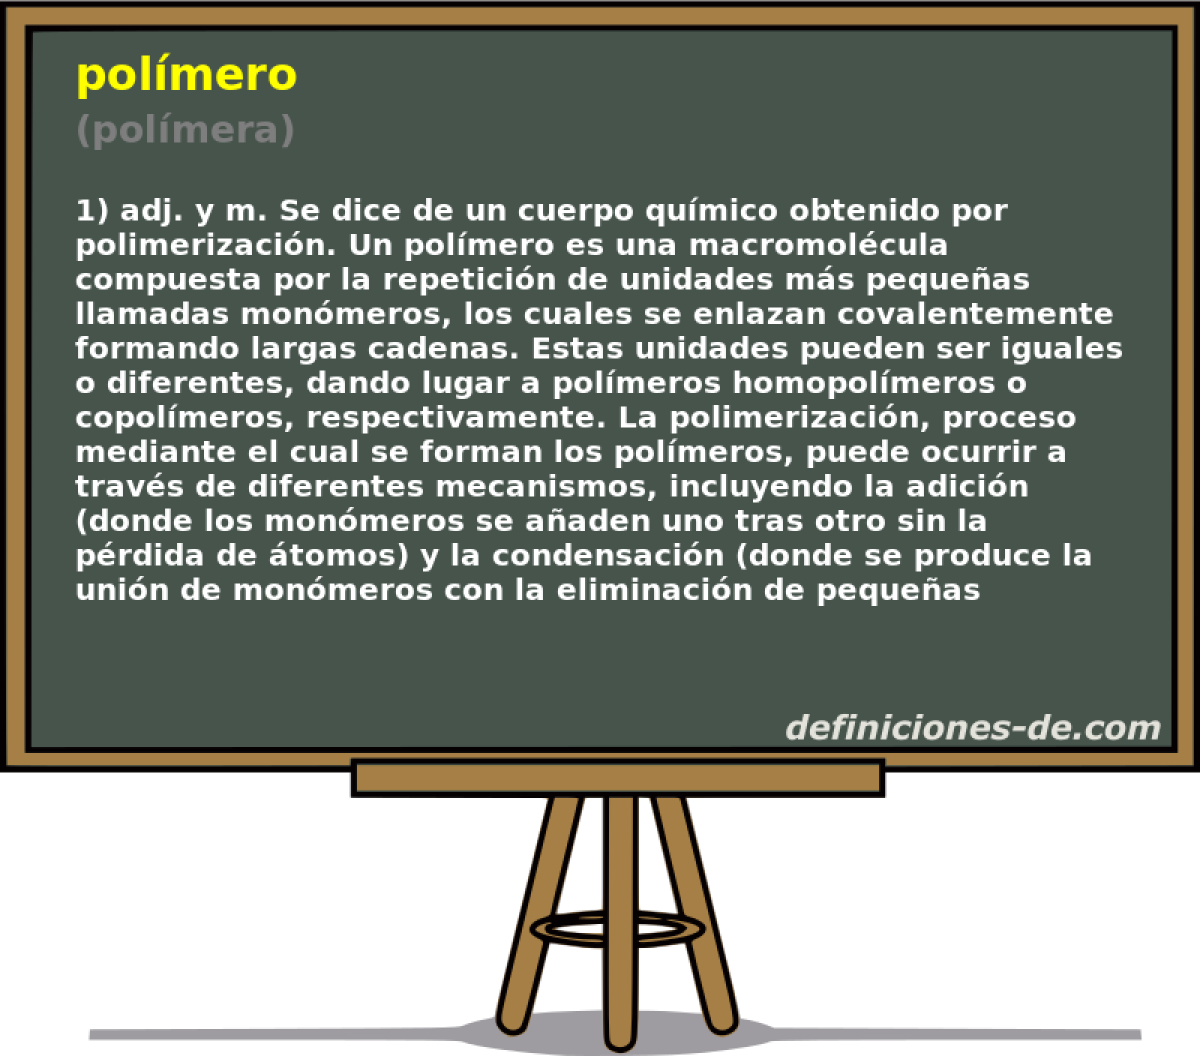 polmero (polmera)